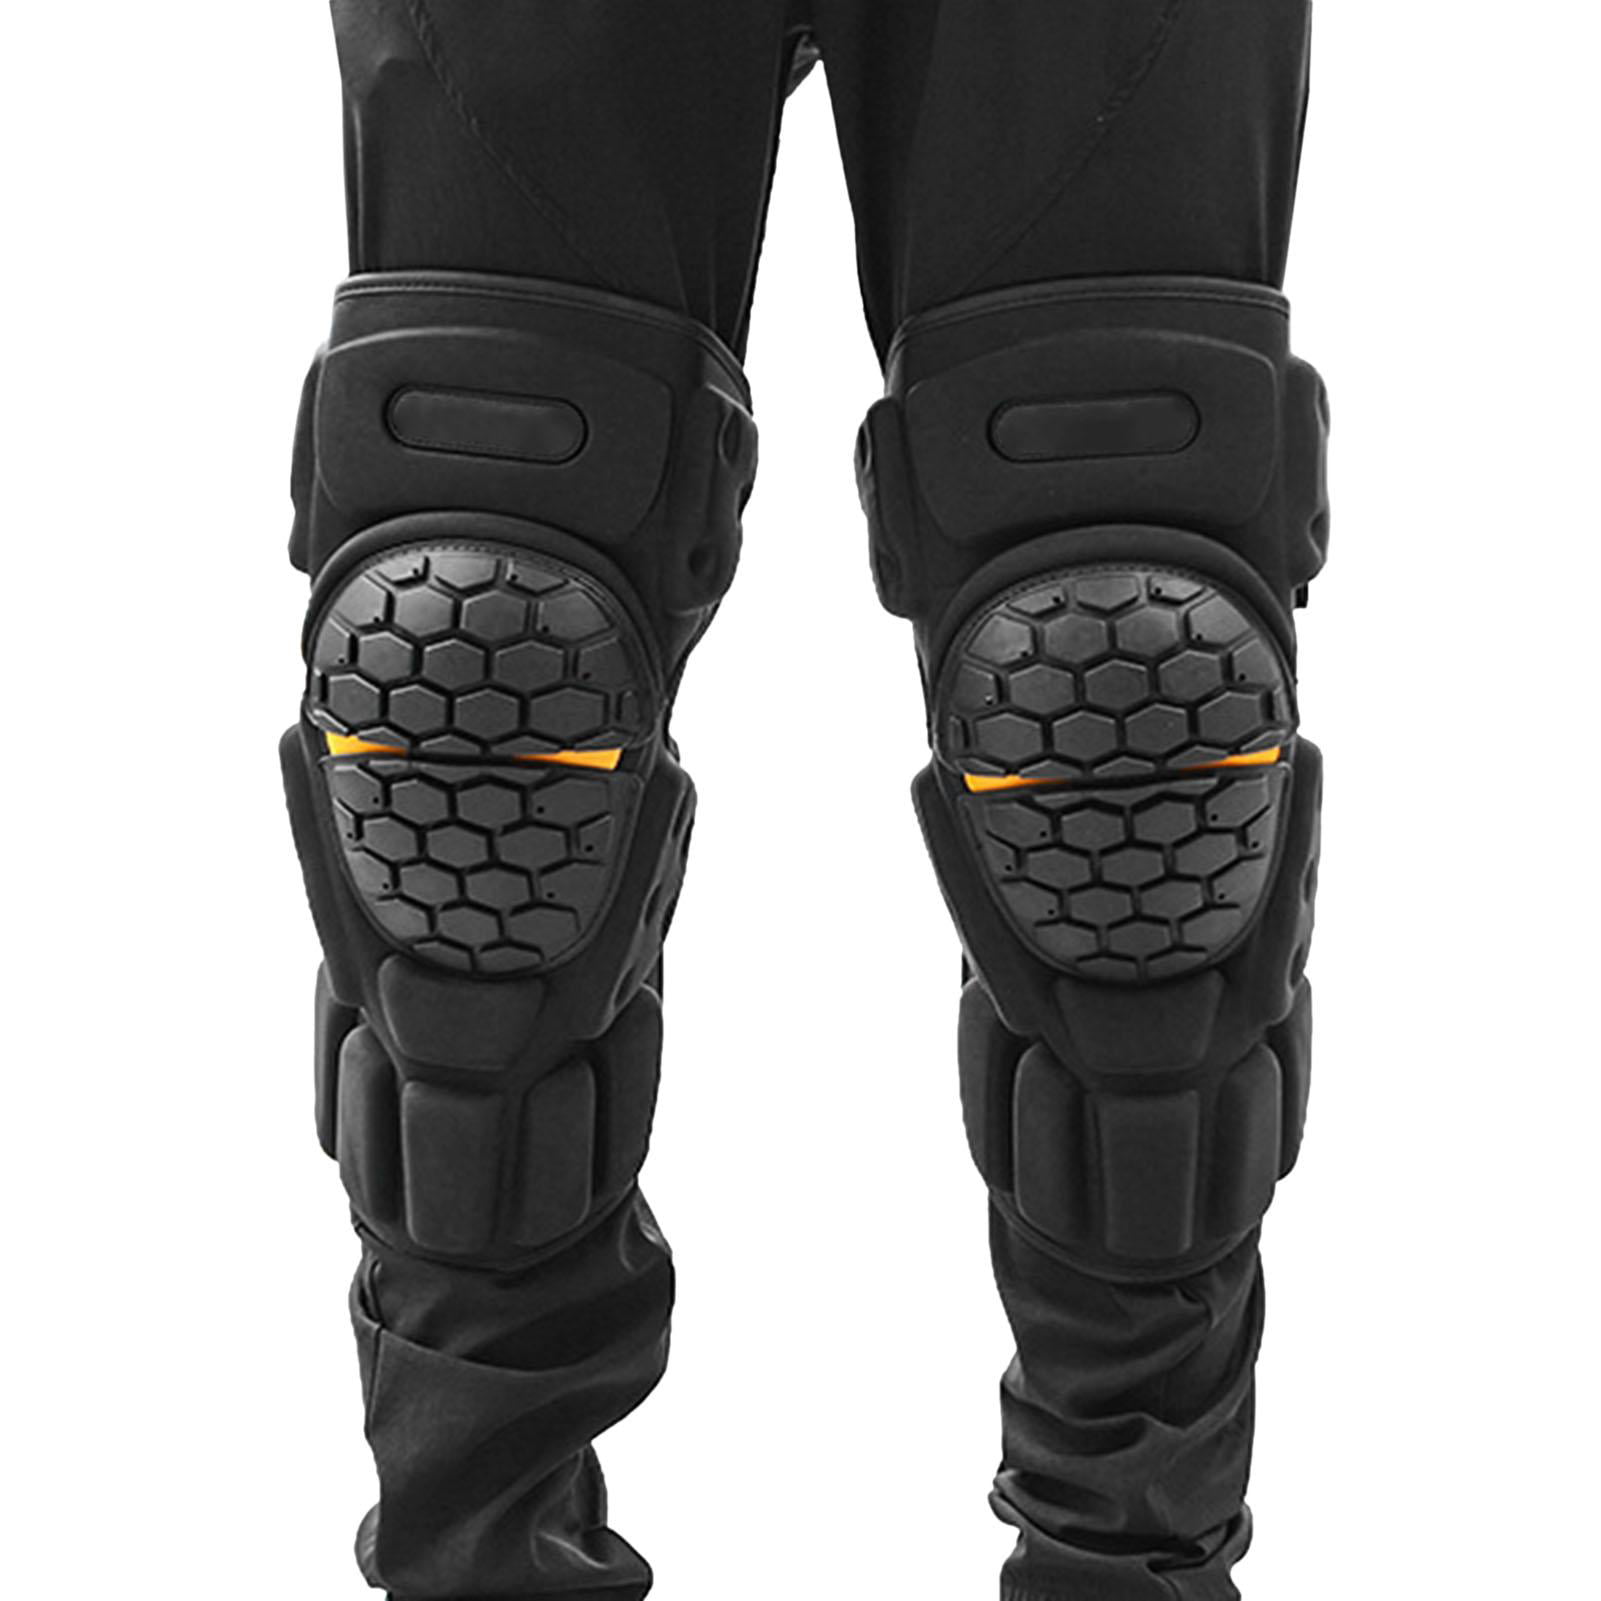 Black Motorcycle Racing Motocross Knee Shin Pads Protector Protective Gear 